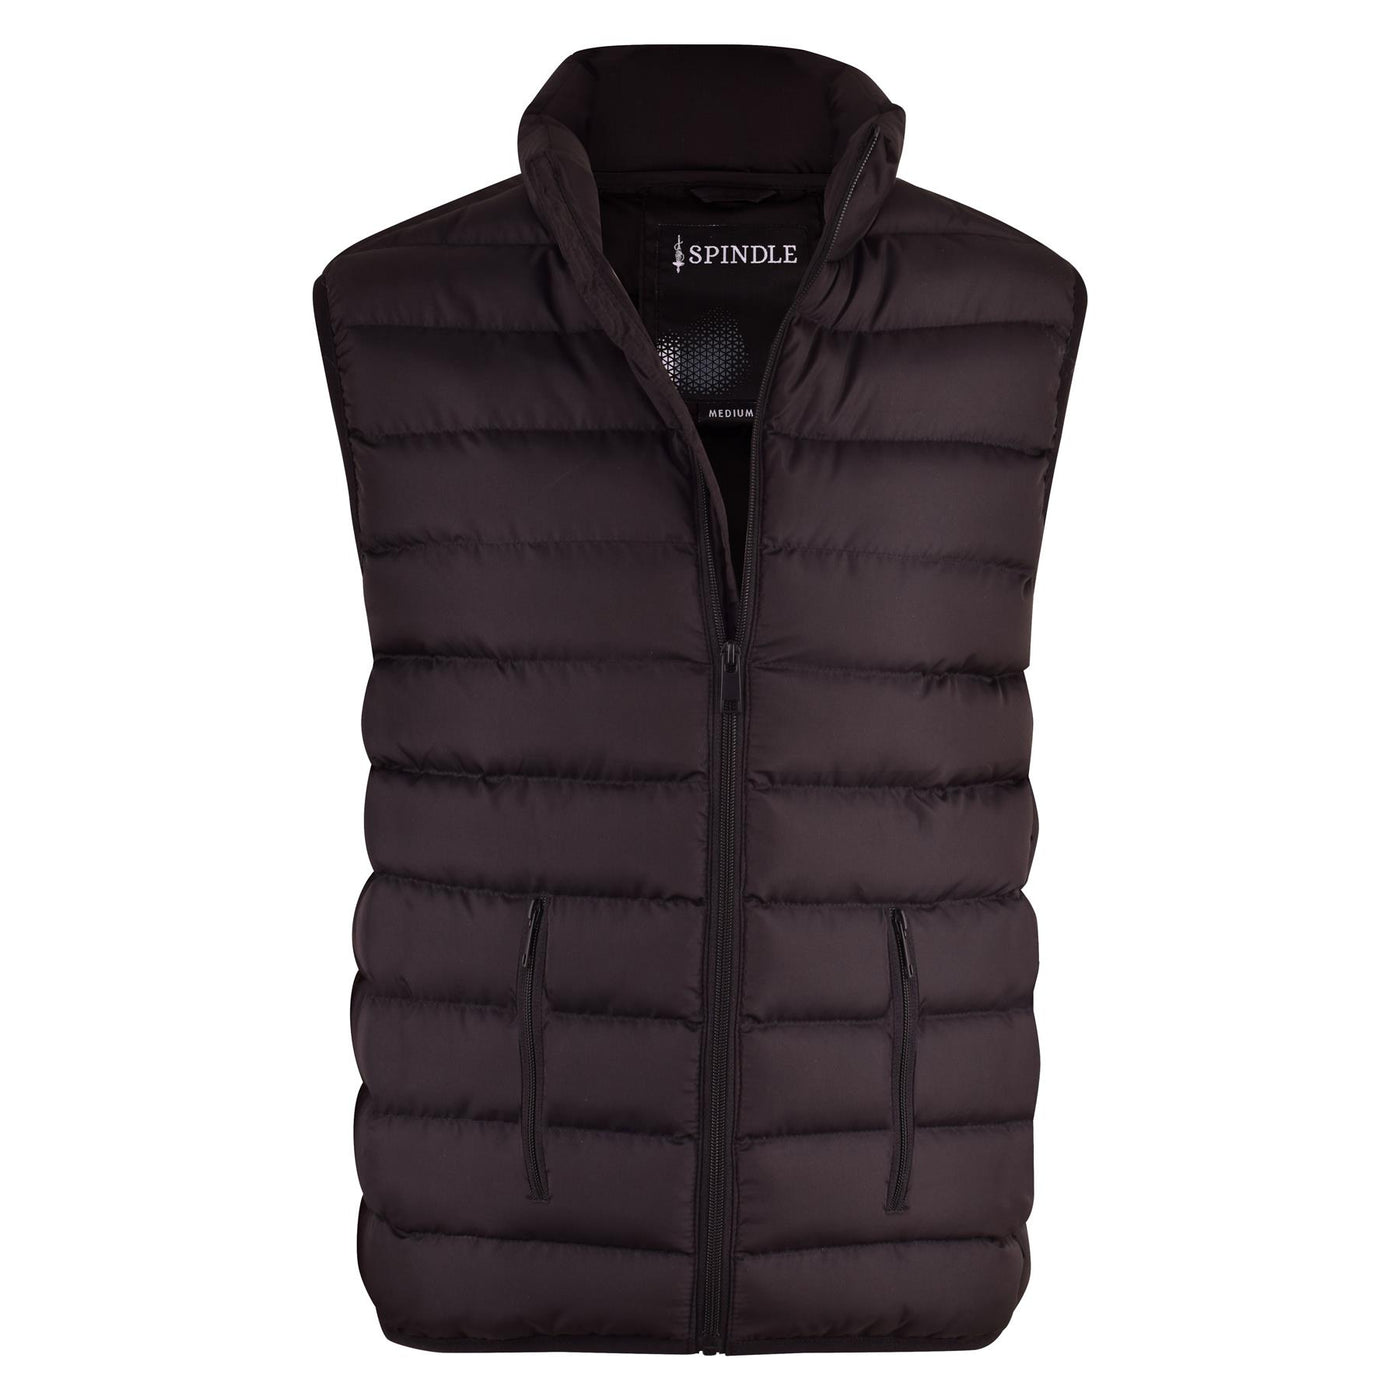 Mens Plain Black Padded Gilet Body Warmer Sleeveless Vest Jacket Zip Pockets Without Hood S M L XL XXL Bodywarmer Gillet Sleeveless